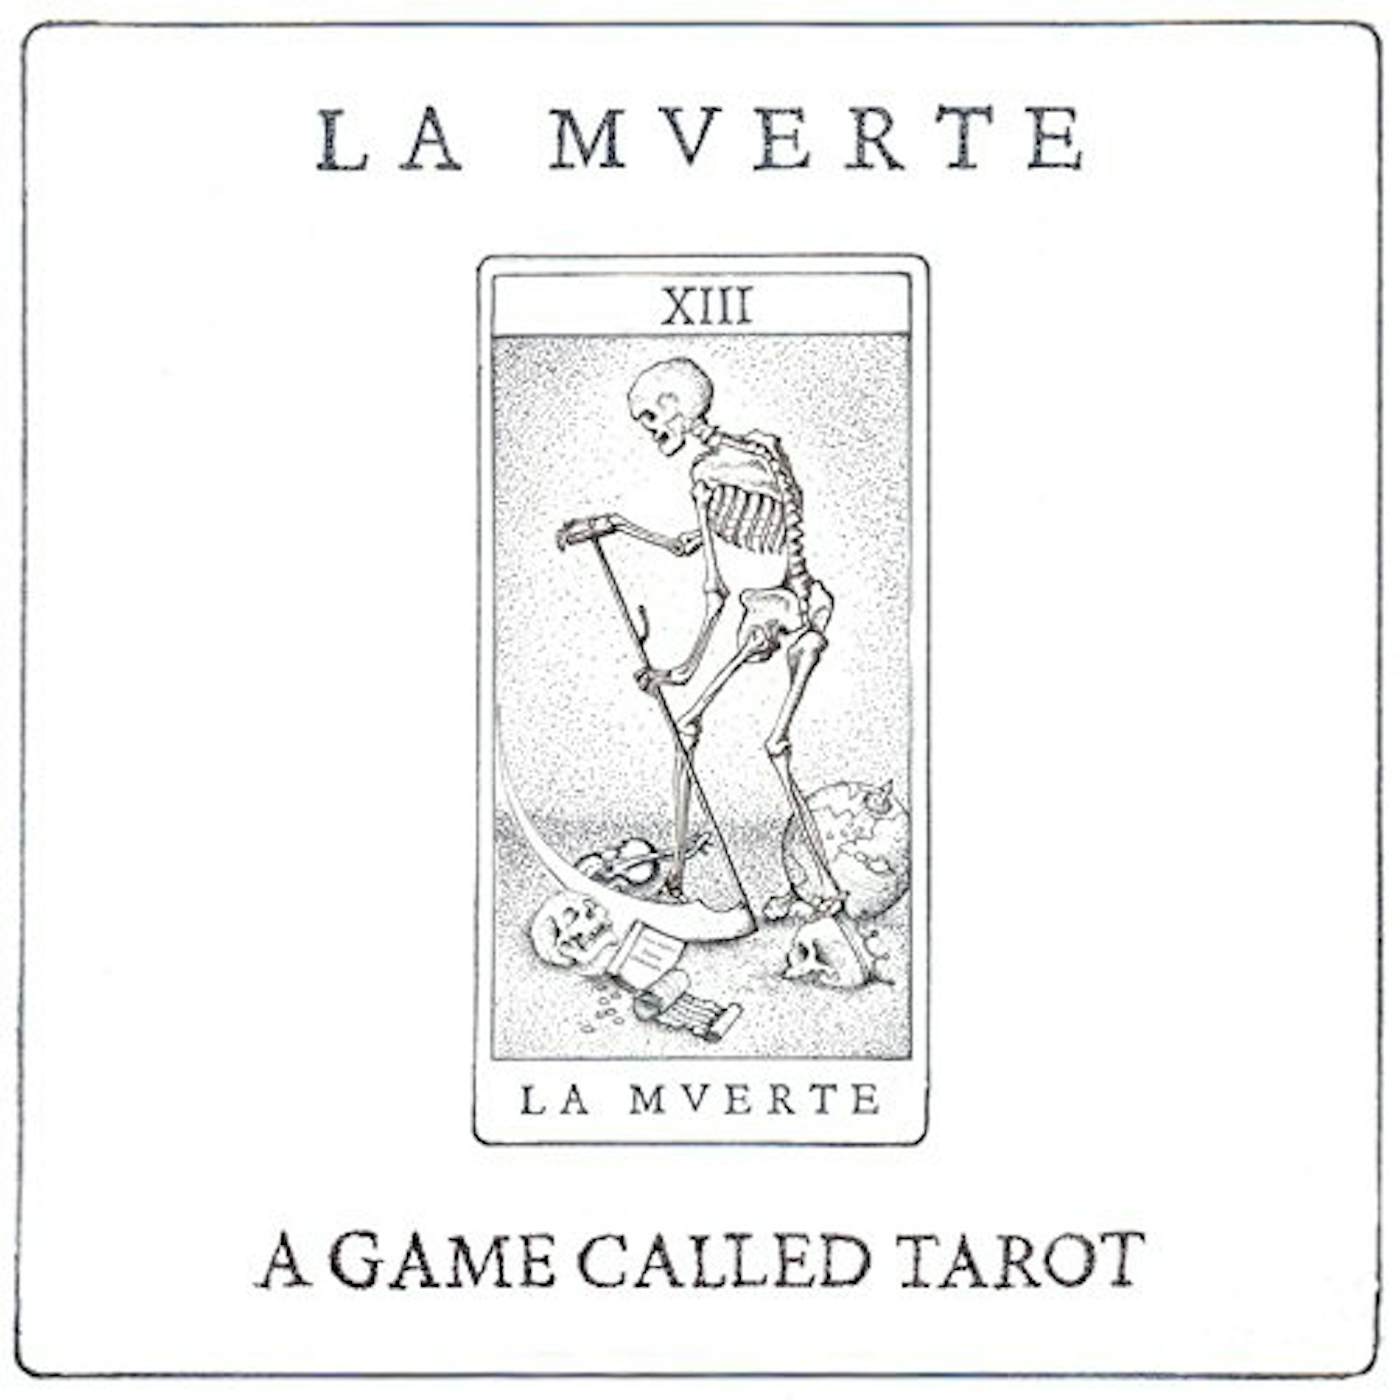 La Mverte GAME CALLED TAROT Vinyl Record